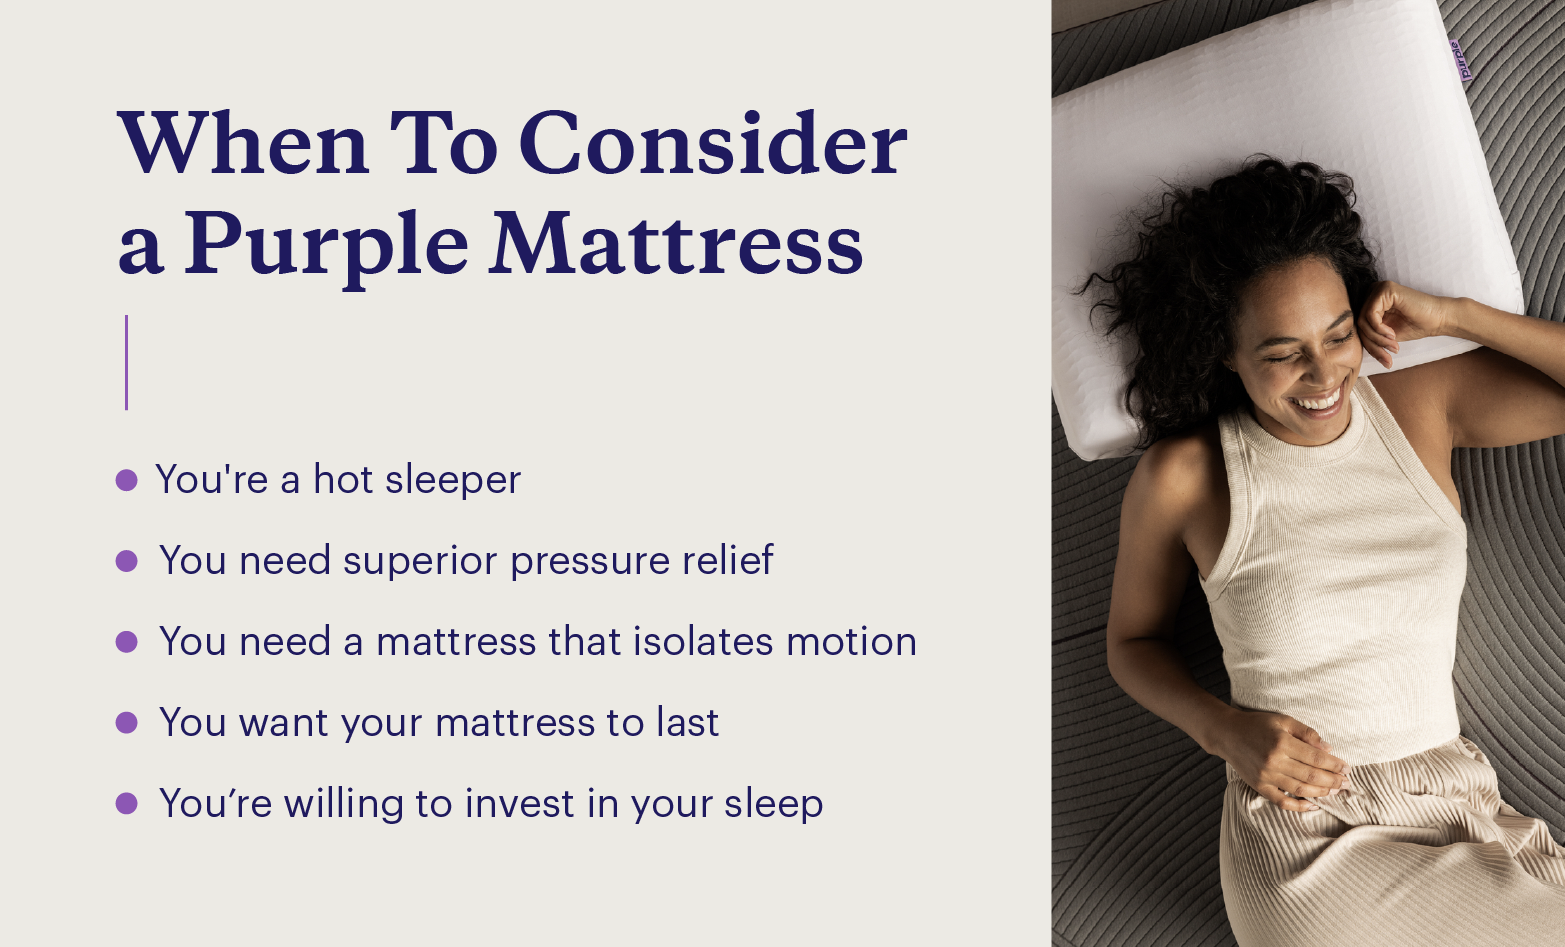 Graphic describing 5 reasons you may consider buying a Purple mattress. 